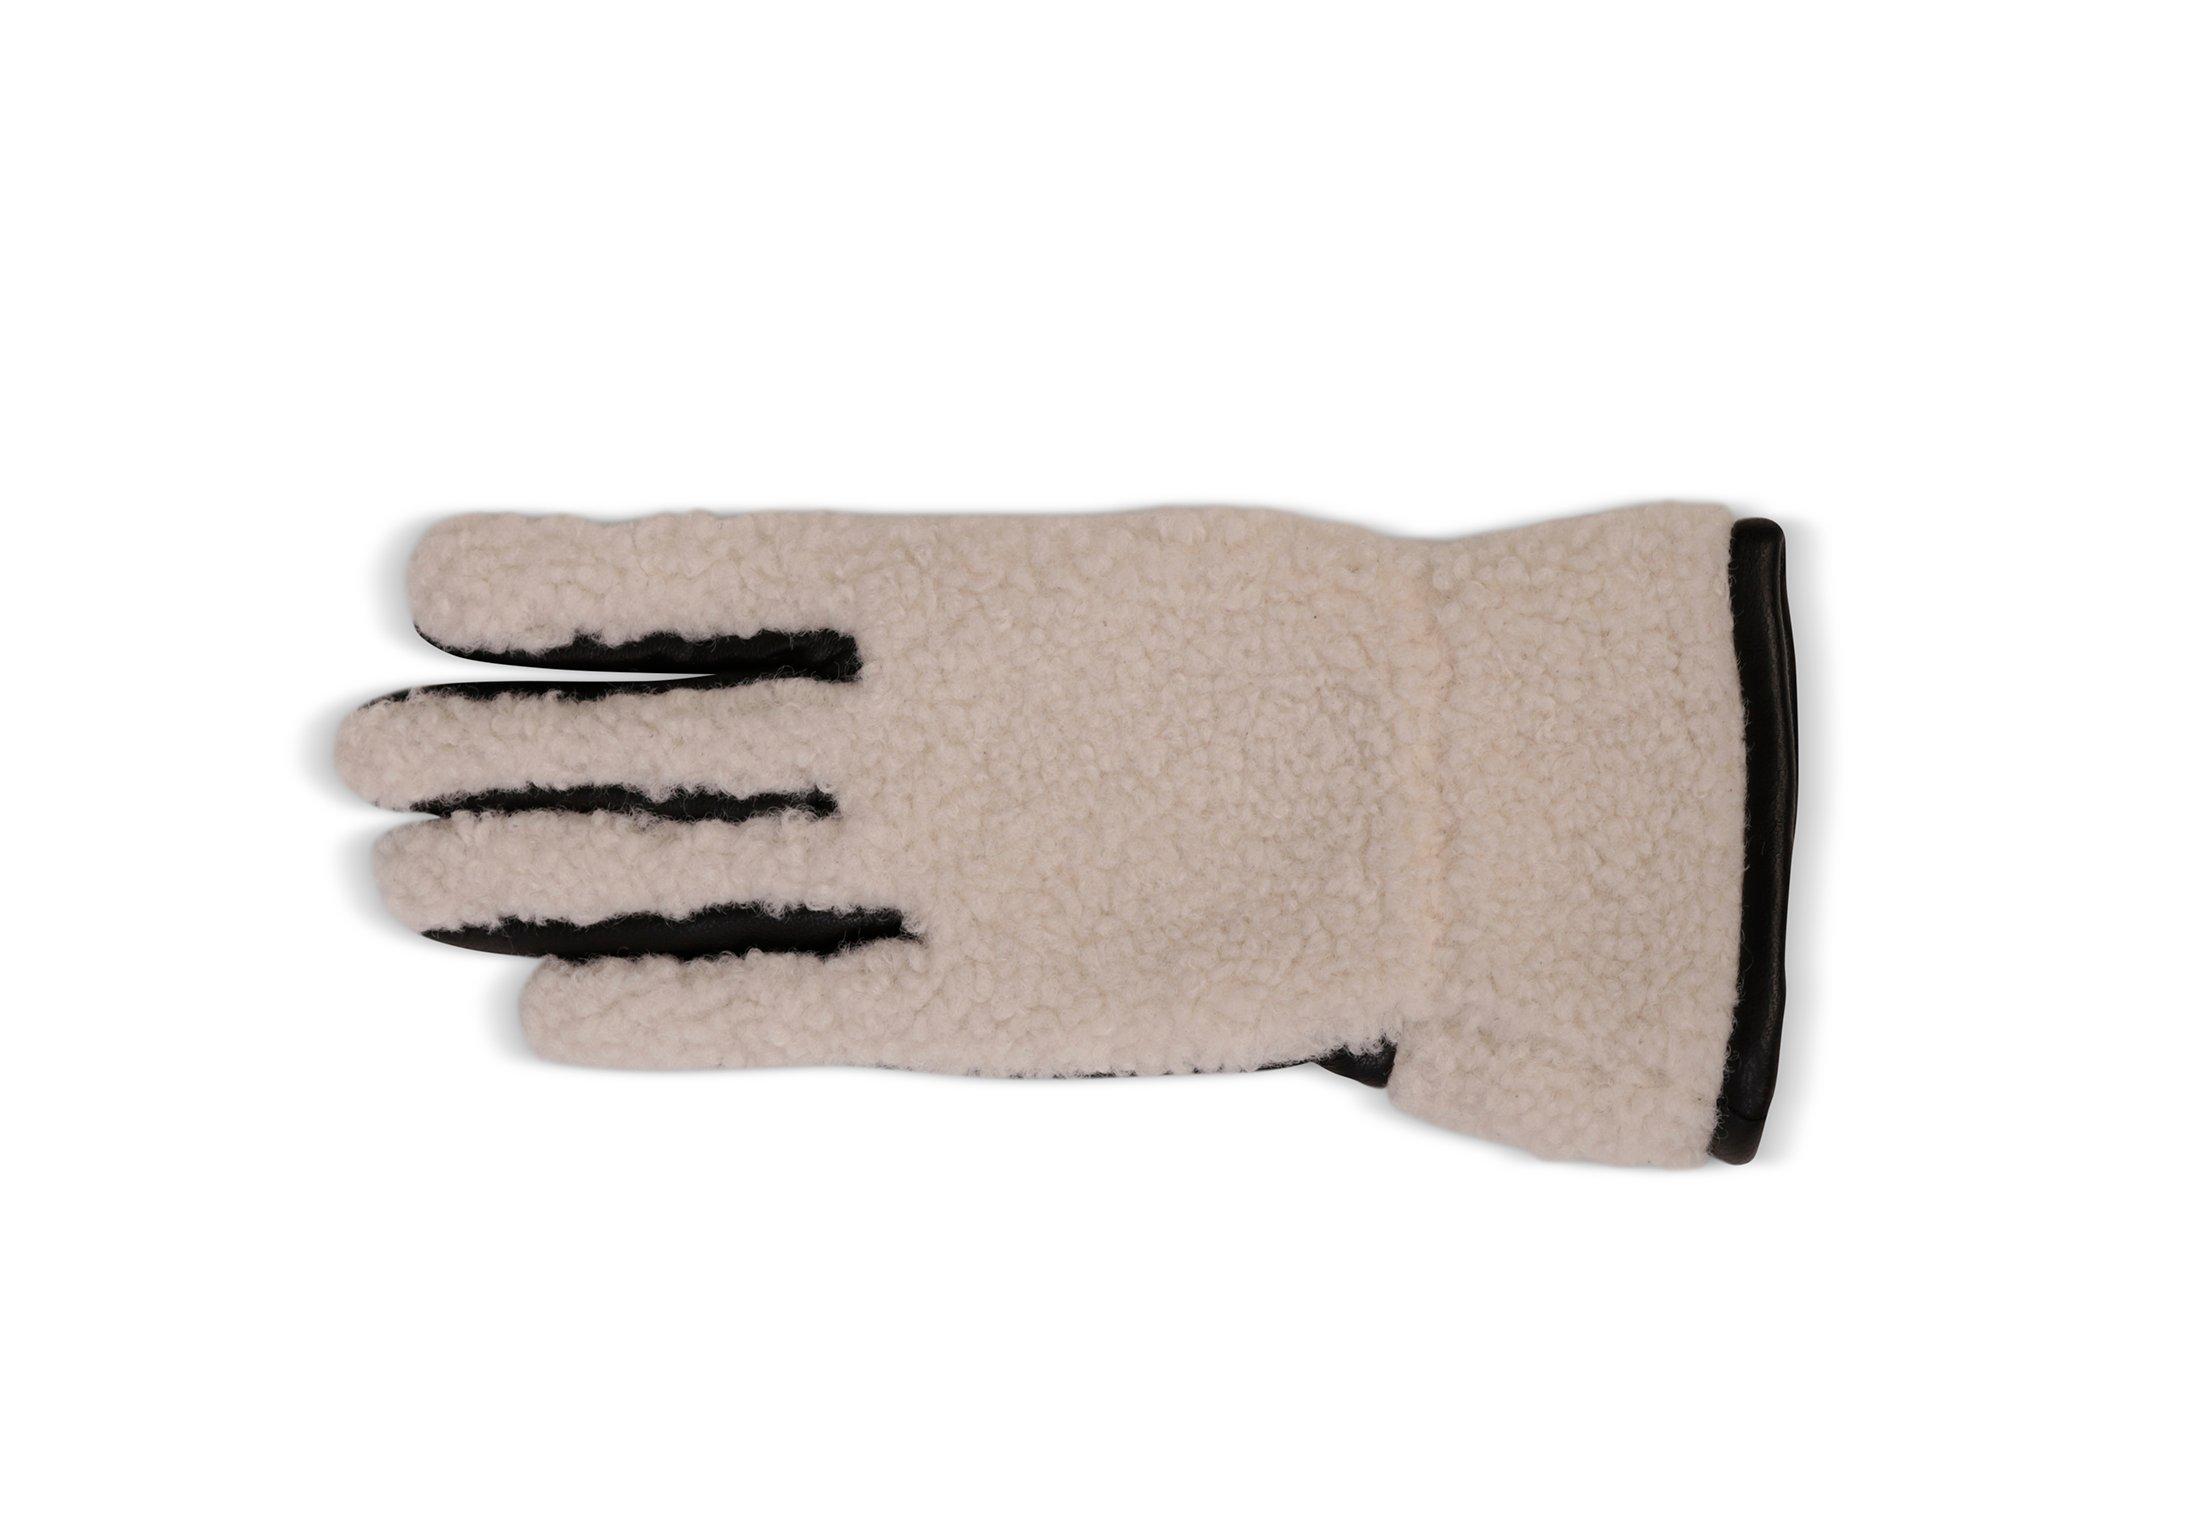 CASH-MERE.CH  Unisex Retro-Fleece-Handschuhe mit Kaschmirfutter 